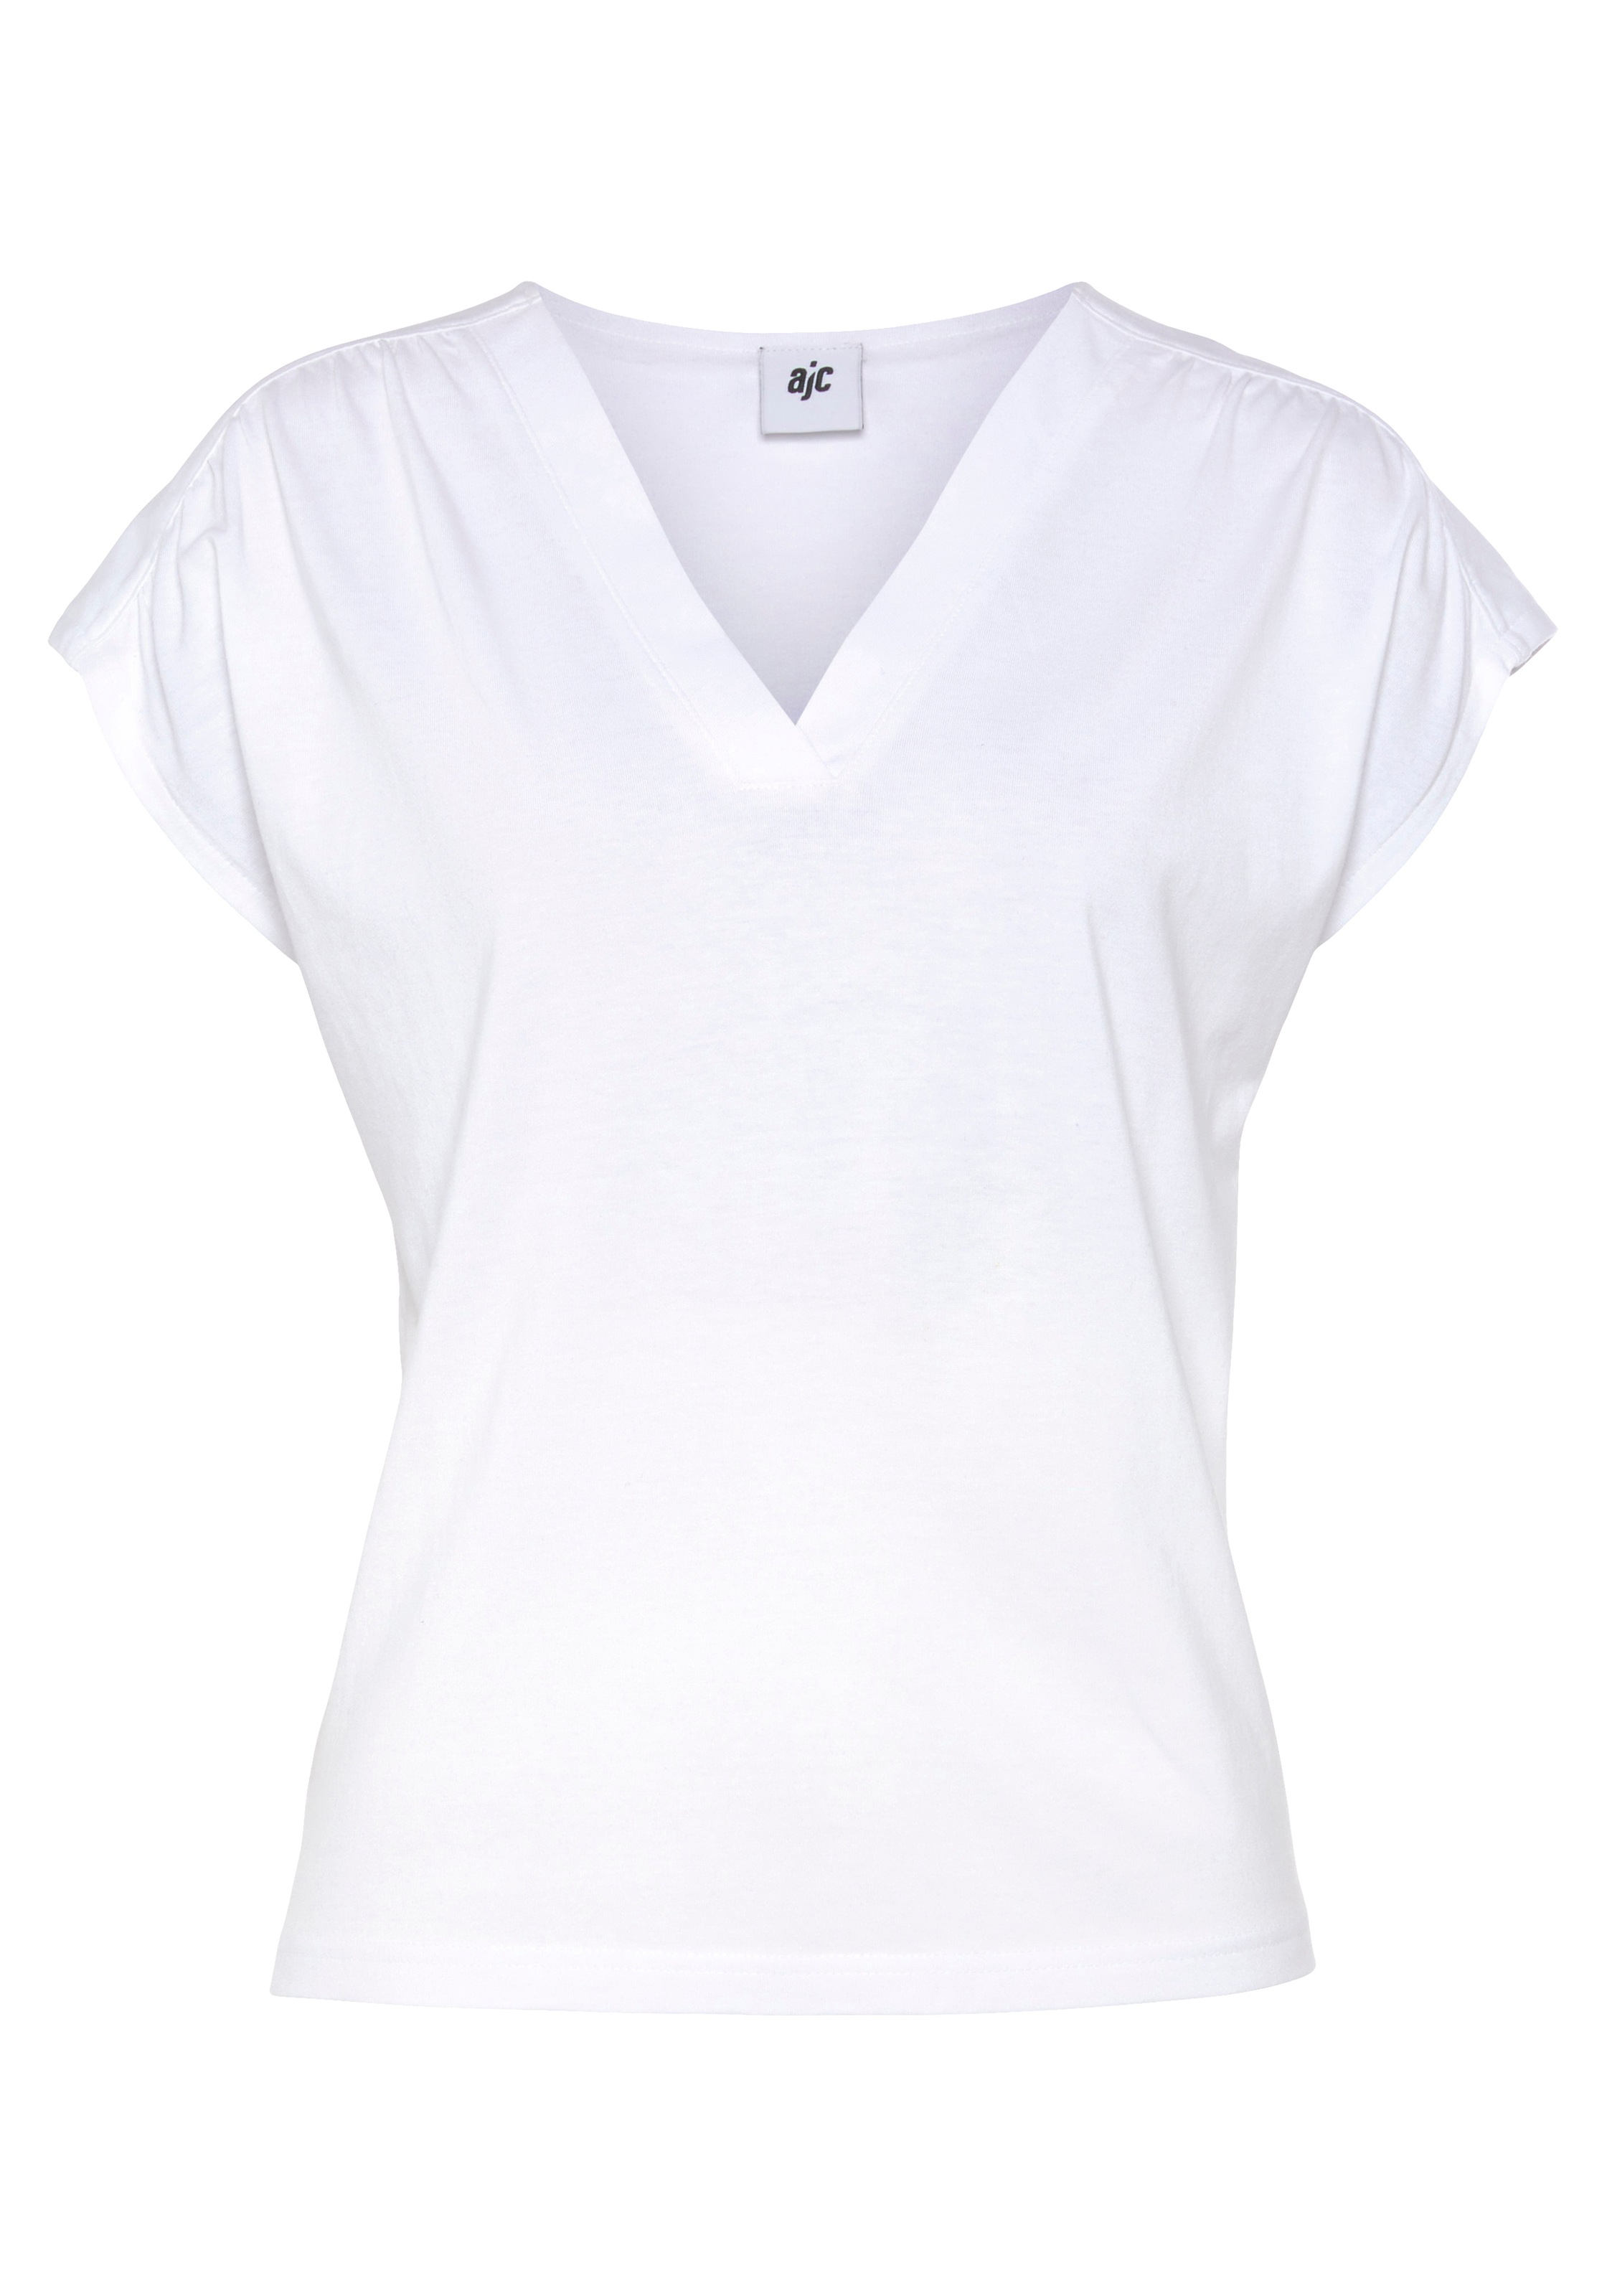 Oversize-Shirt im AJC bestellen Online-Shop